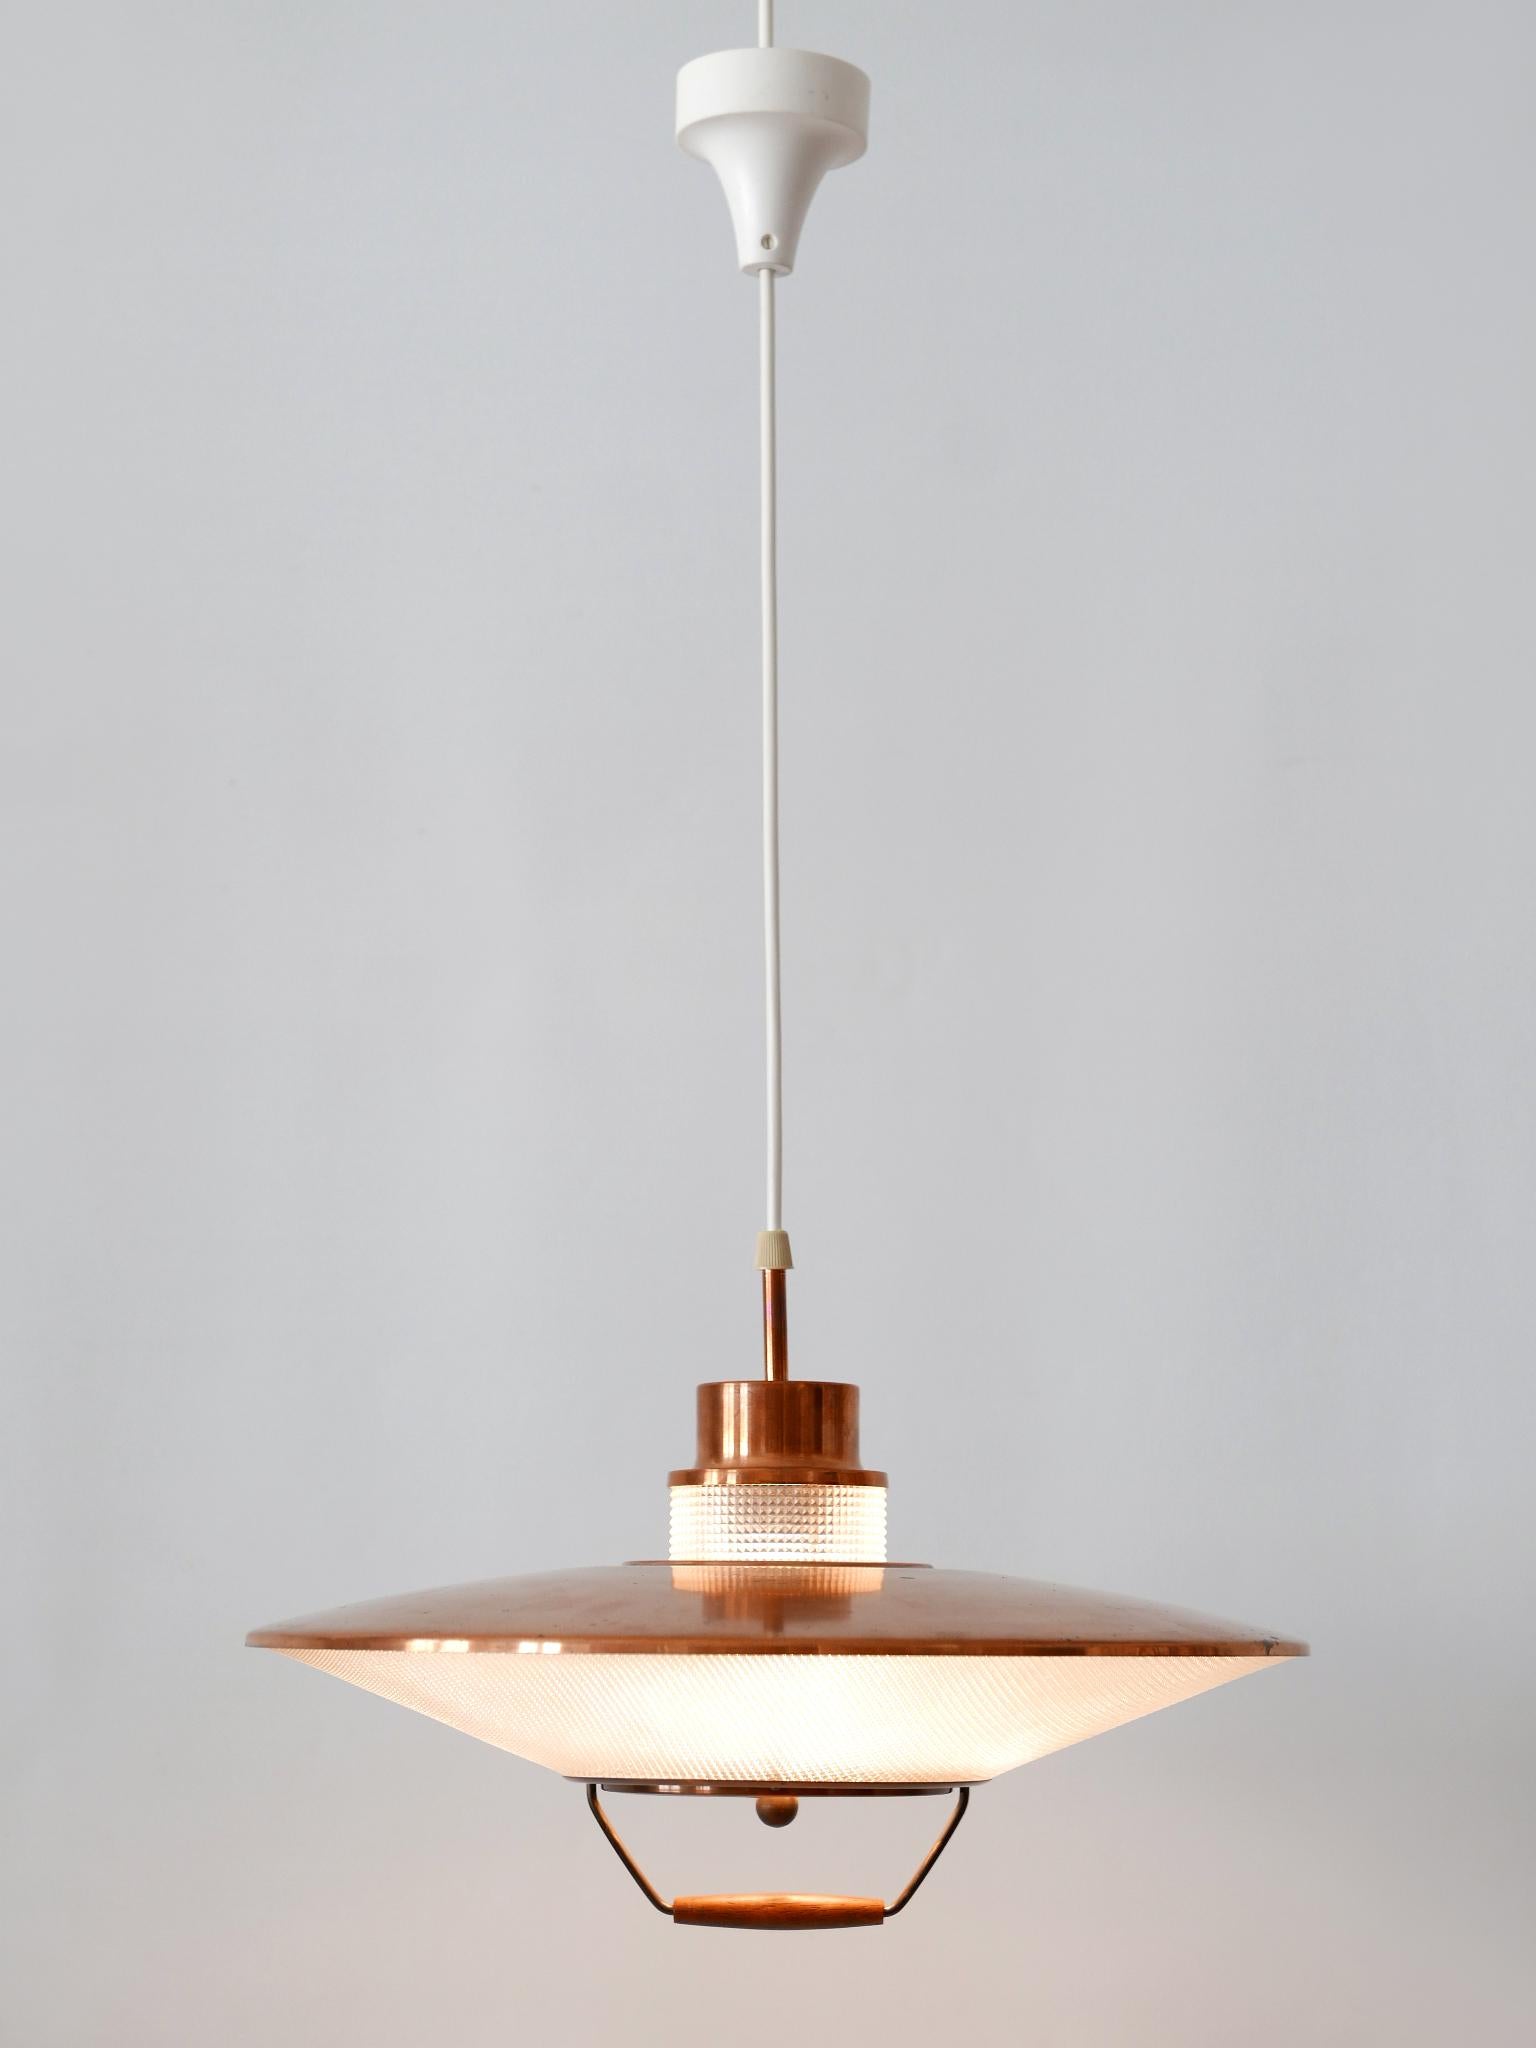 Rare Mid-Century Modern Scandinavian Copper Pendant Lamp or Hanging Light 1960s  For Sale 4